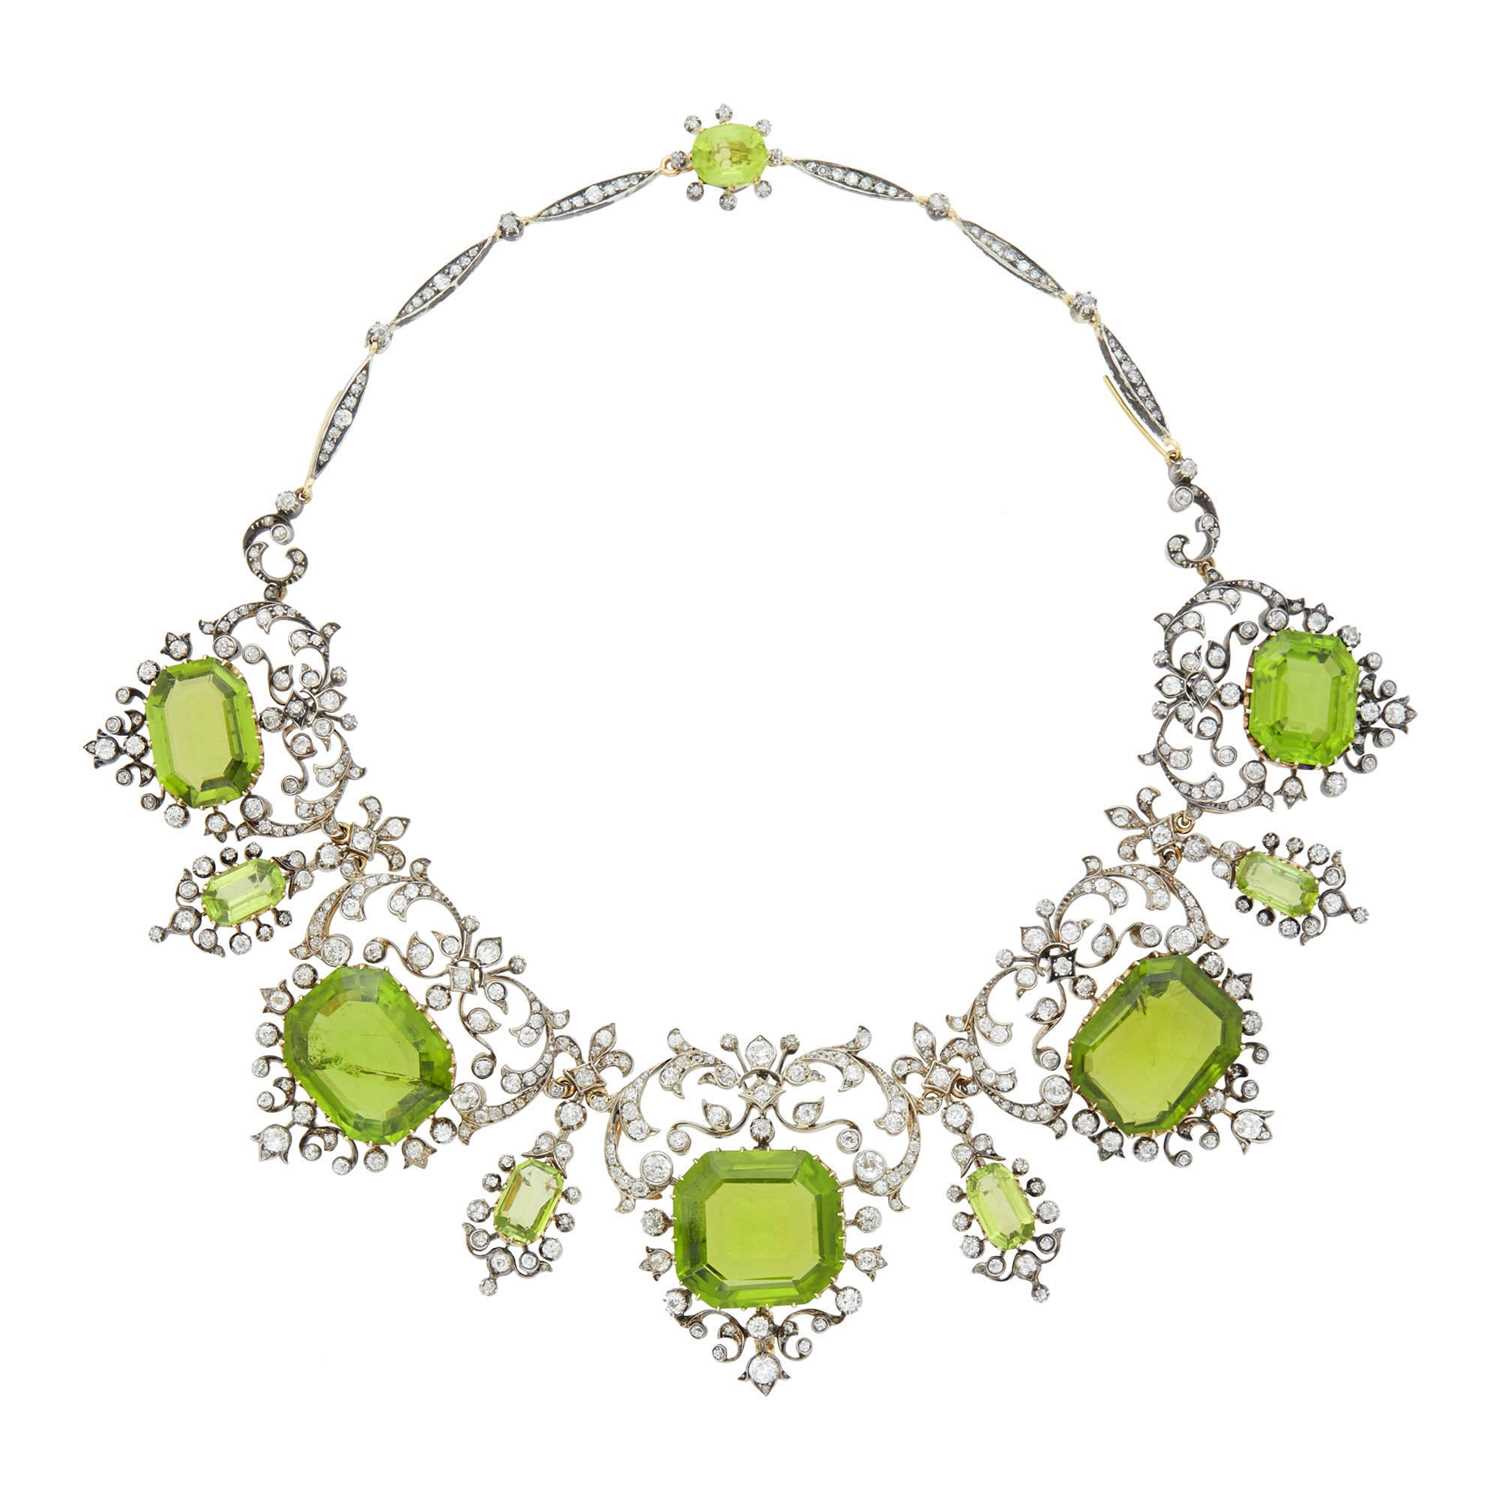 Lot 162 - Belle Epoque Silver, Gold, Peridot and Diamond Necklace/Tiara Combination